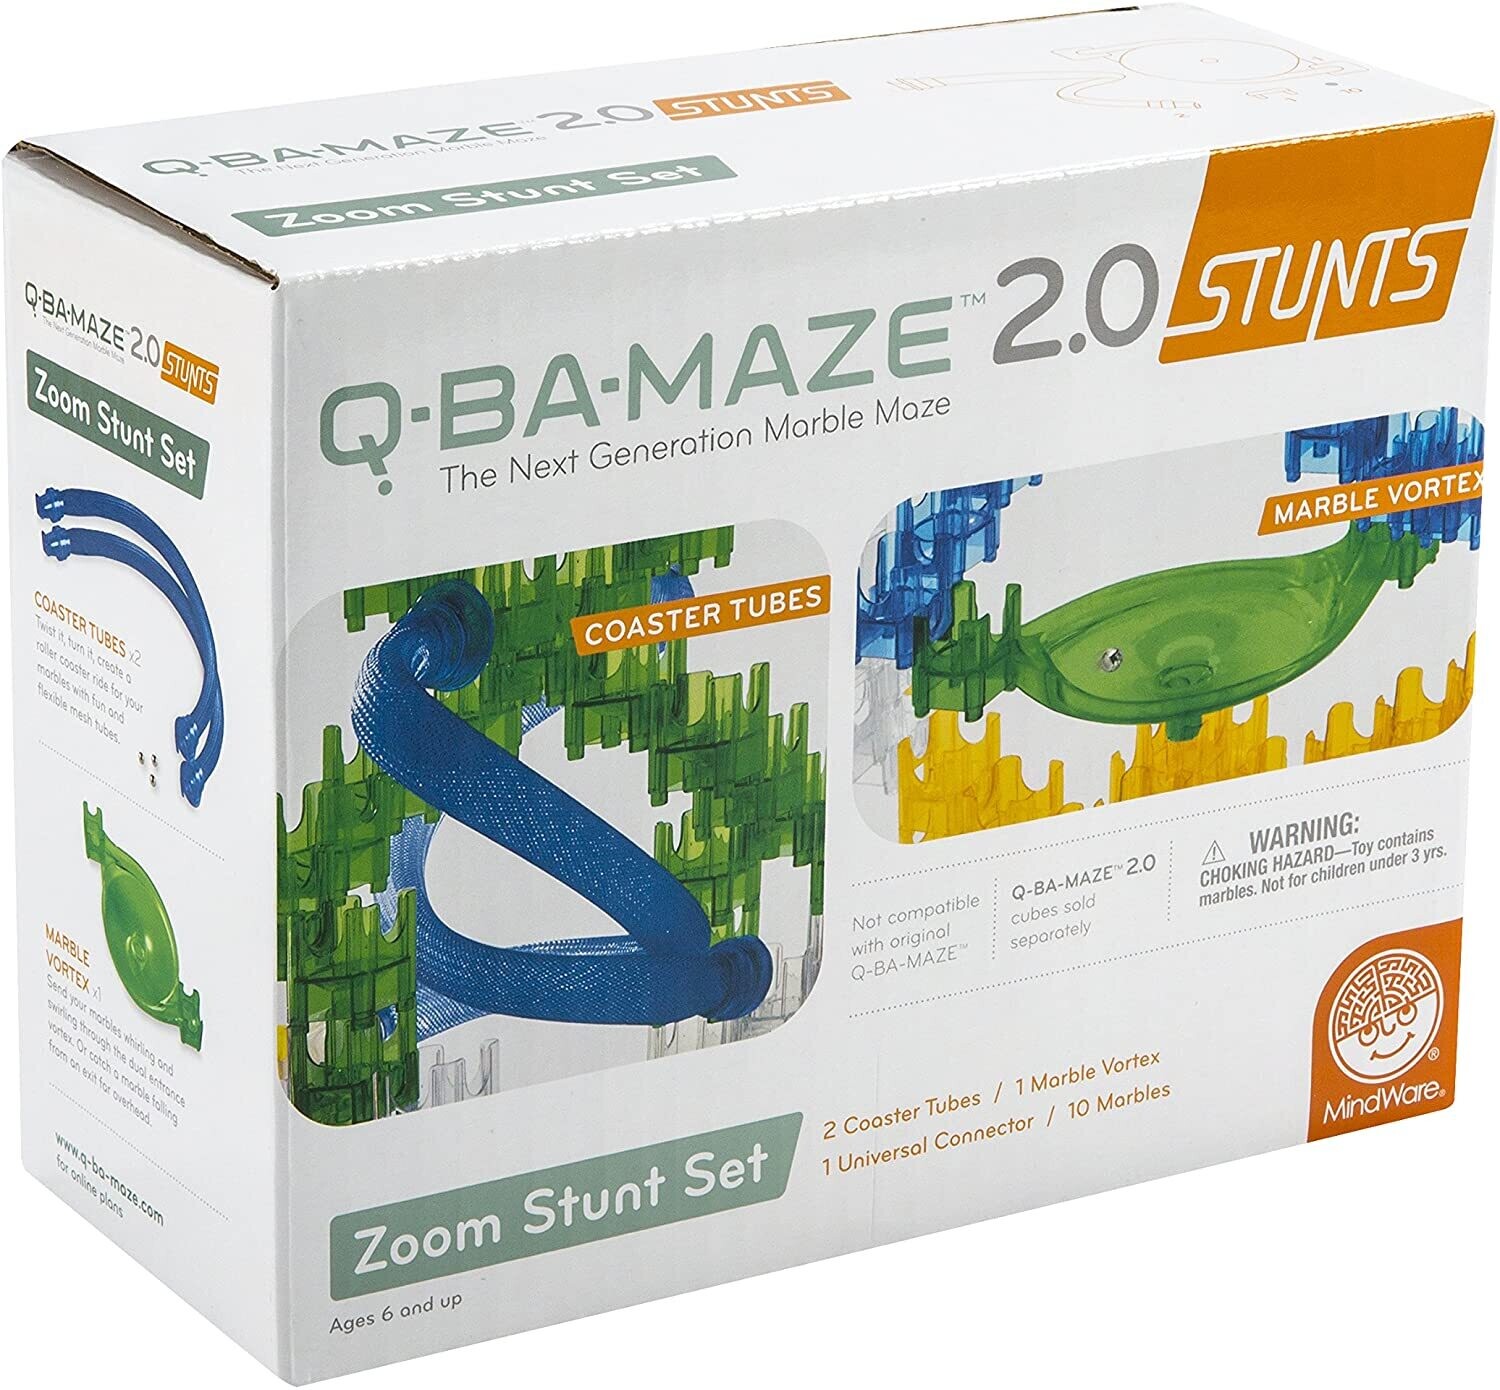 Q-Ba Maze 2.0 Zoom Stunt Set